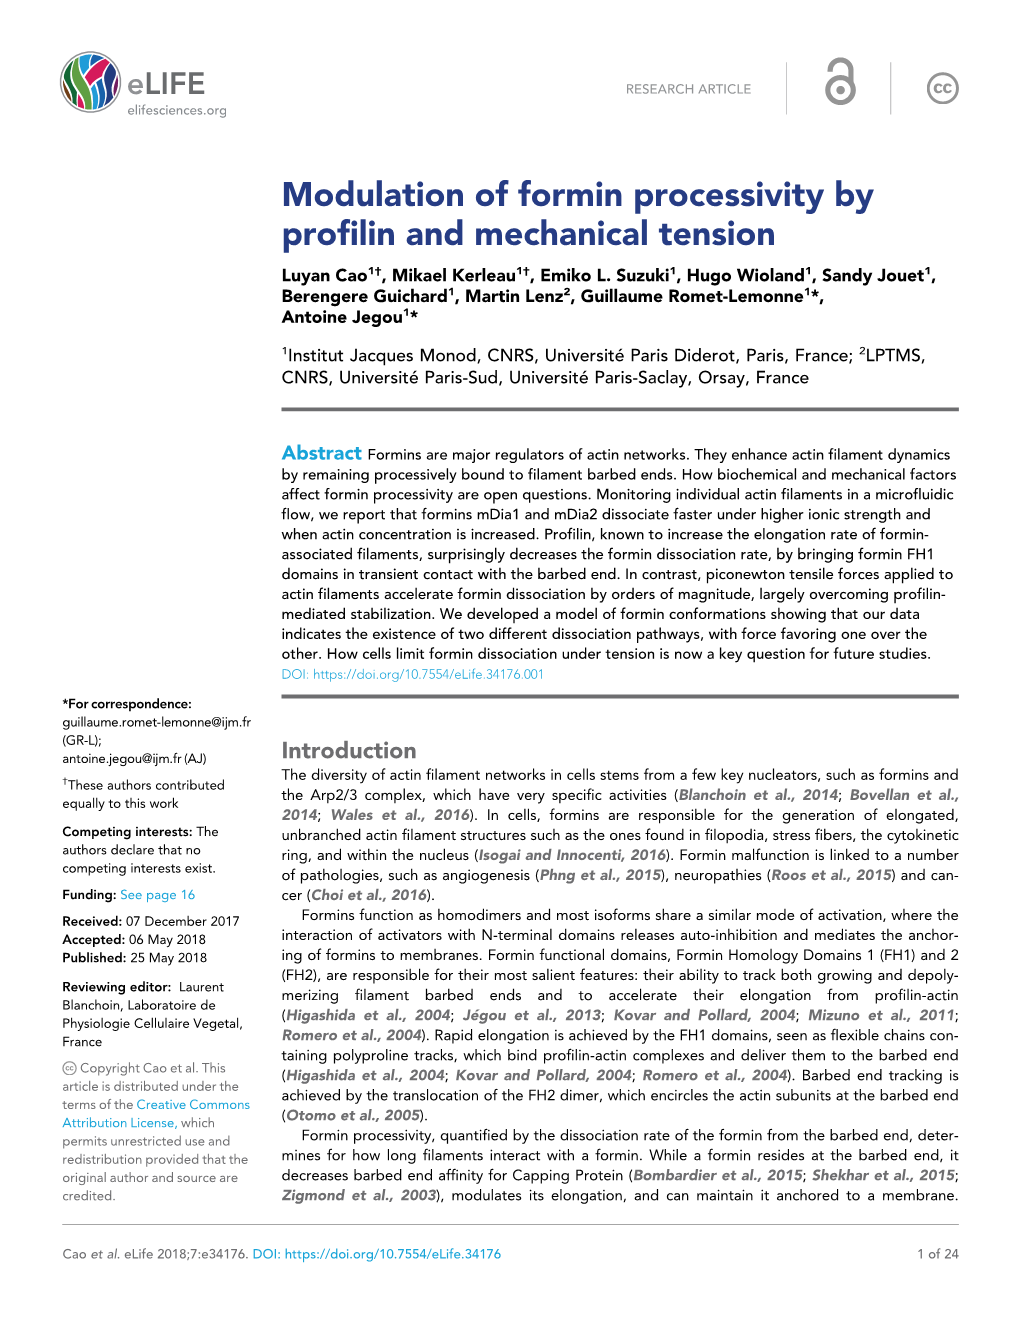 Modulation of Formin Processivity by Profilin and Mechanical Tension Luyan Cao1†, Mikael Kerleau1†, Emiko L